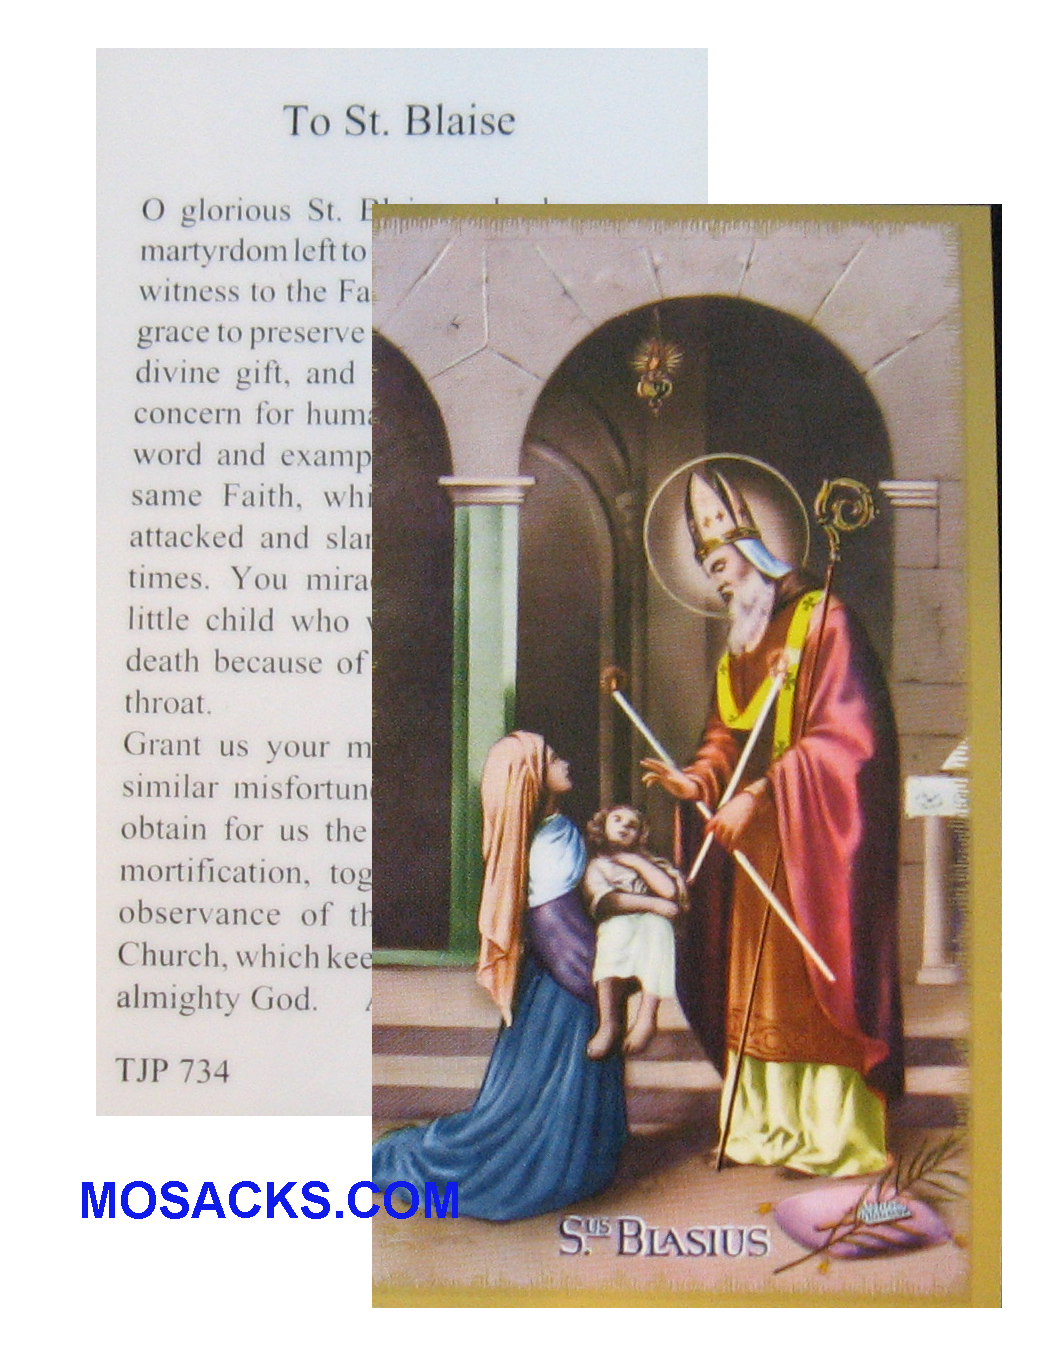 St. Blaise Patron Saint of Throats holy card TJP 7341050 x 1350